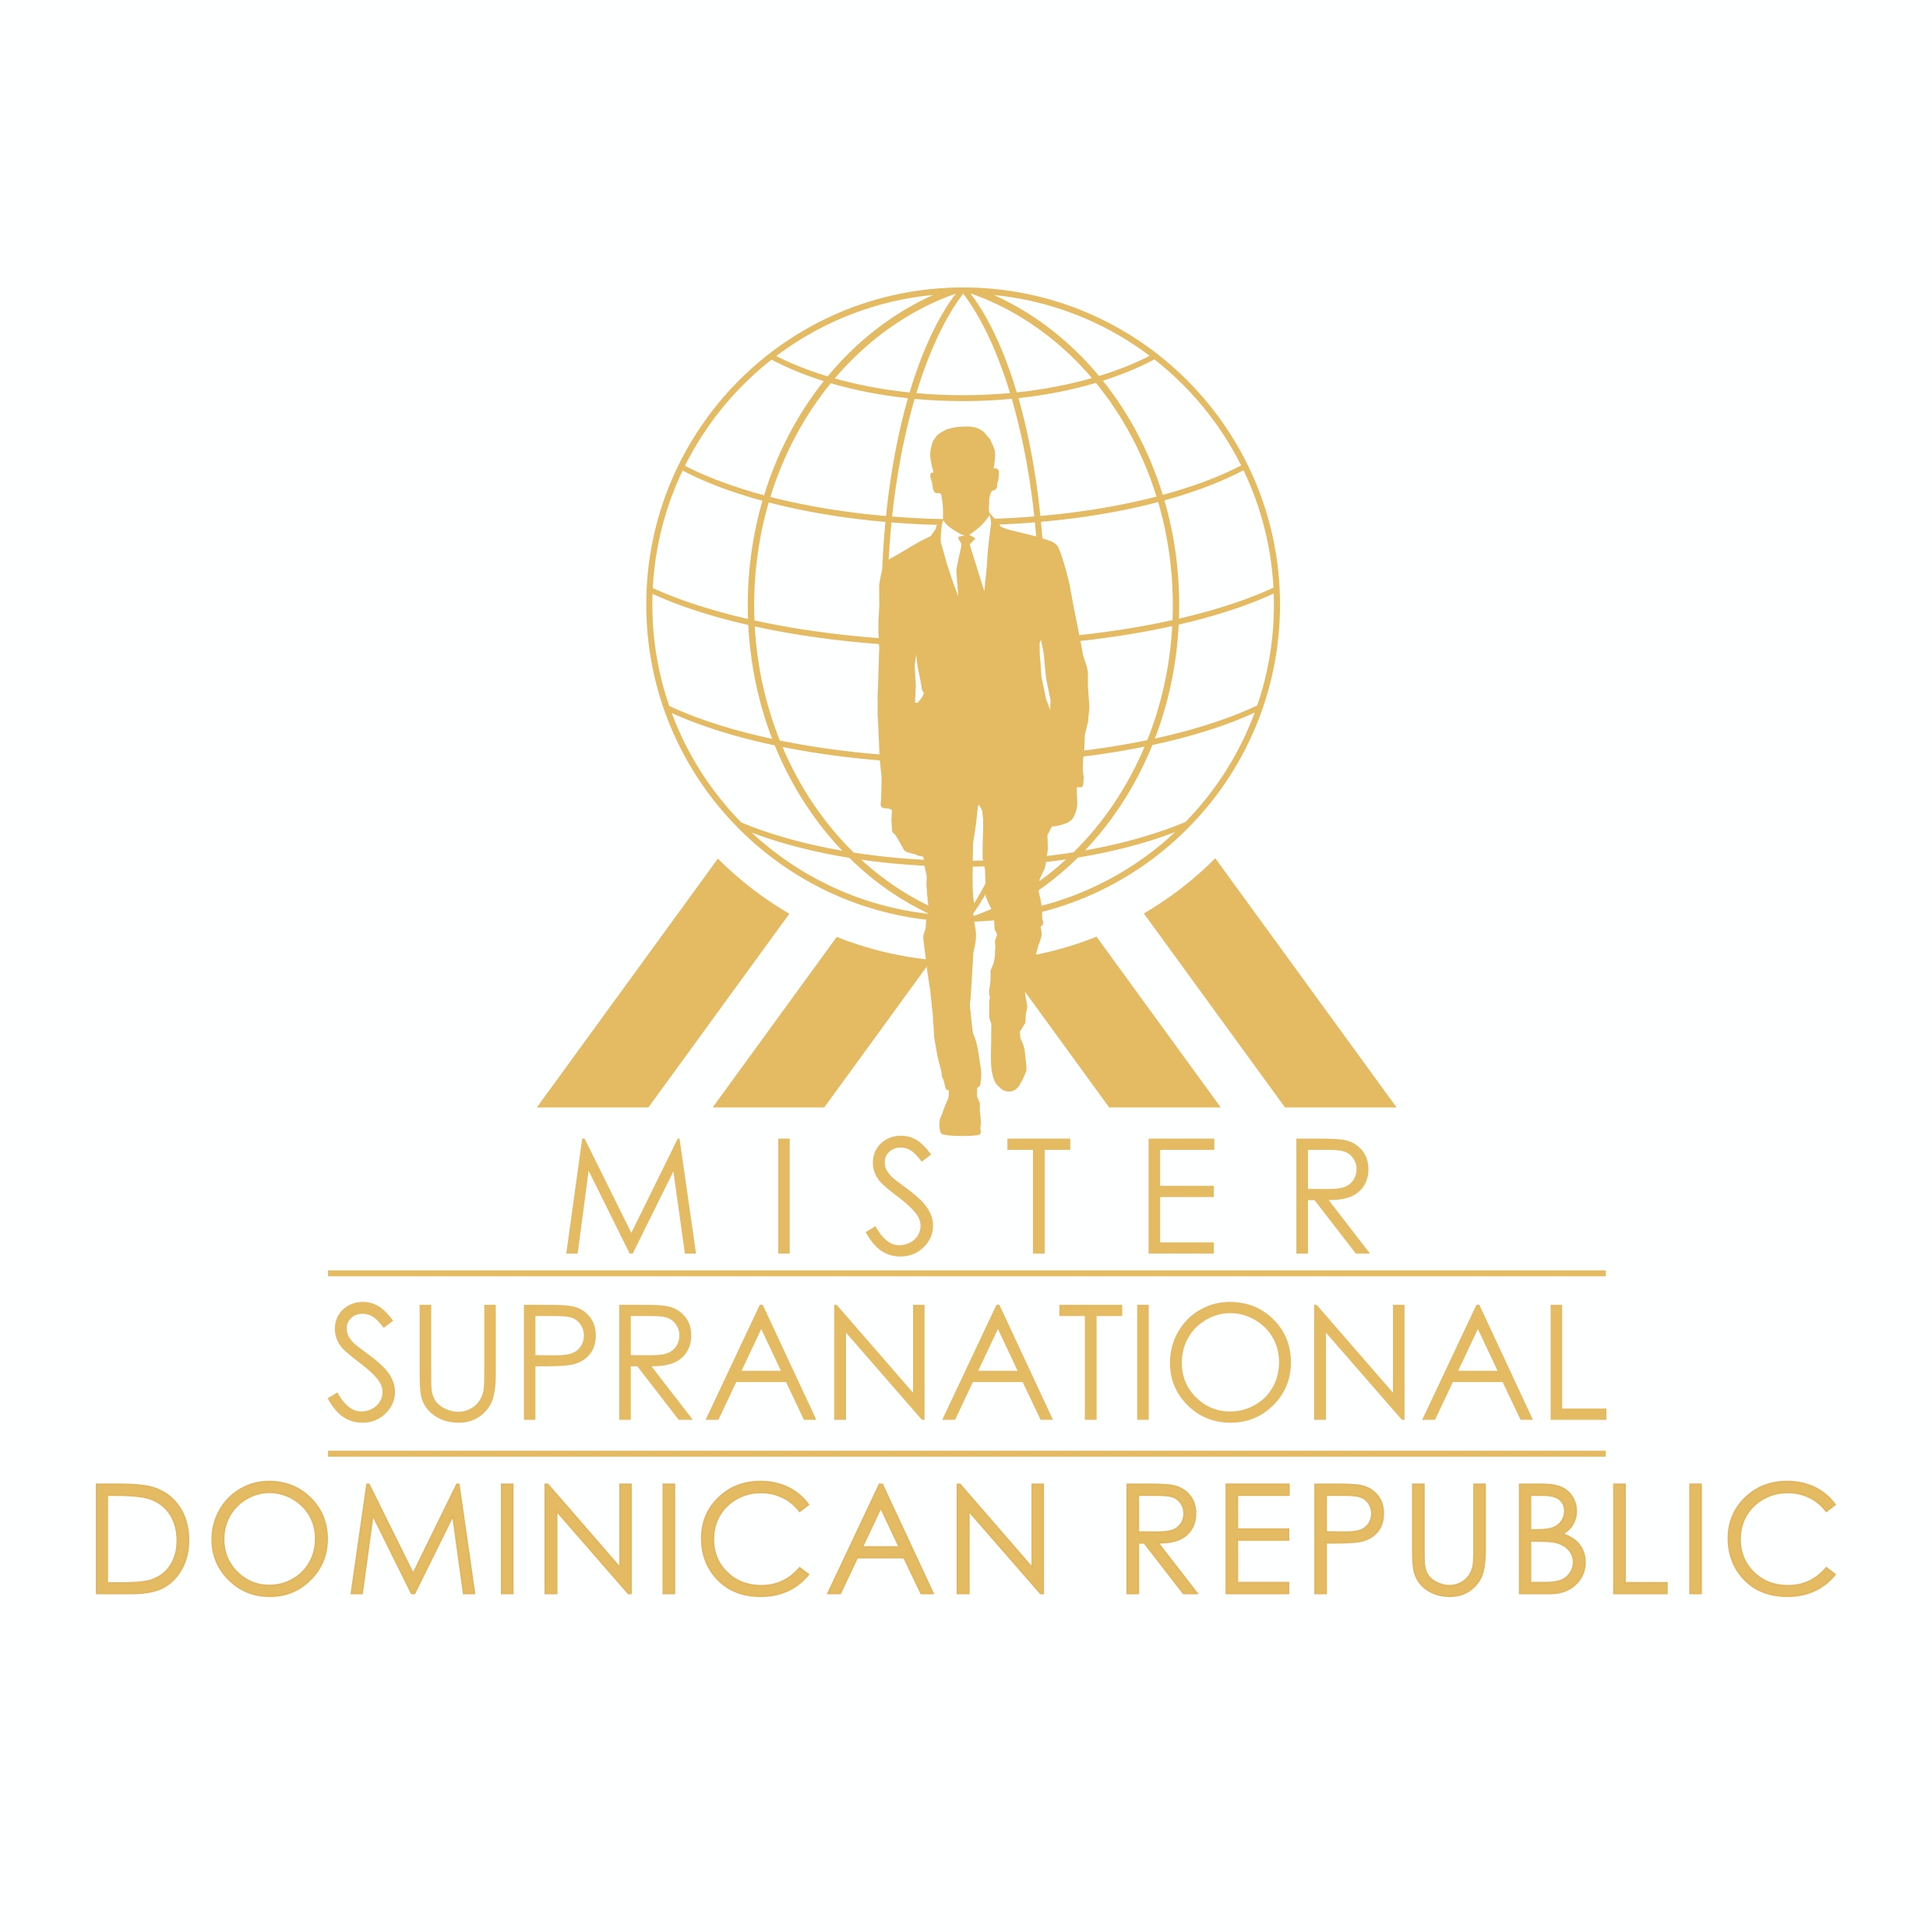 LOGO MISTER SUPRANATIONAL DOMINICAN REPUBLIC